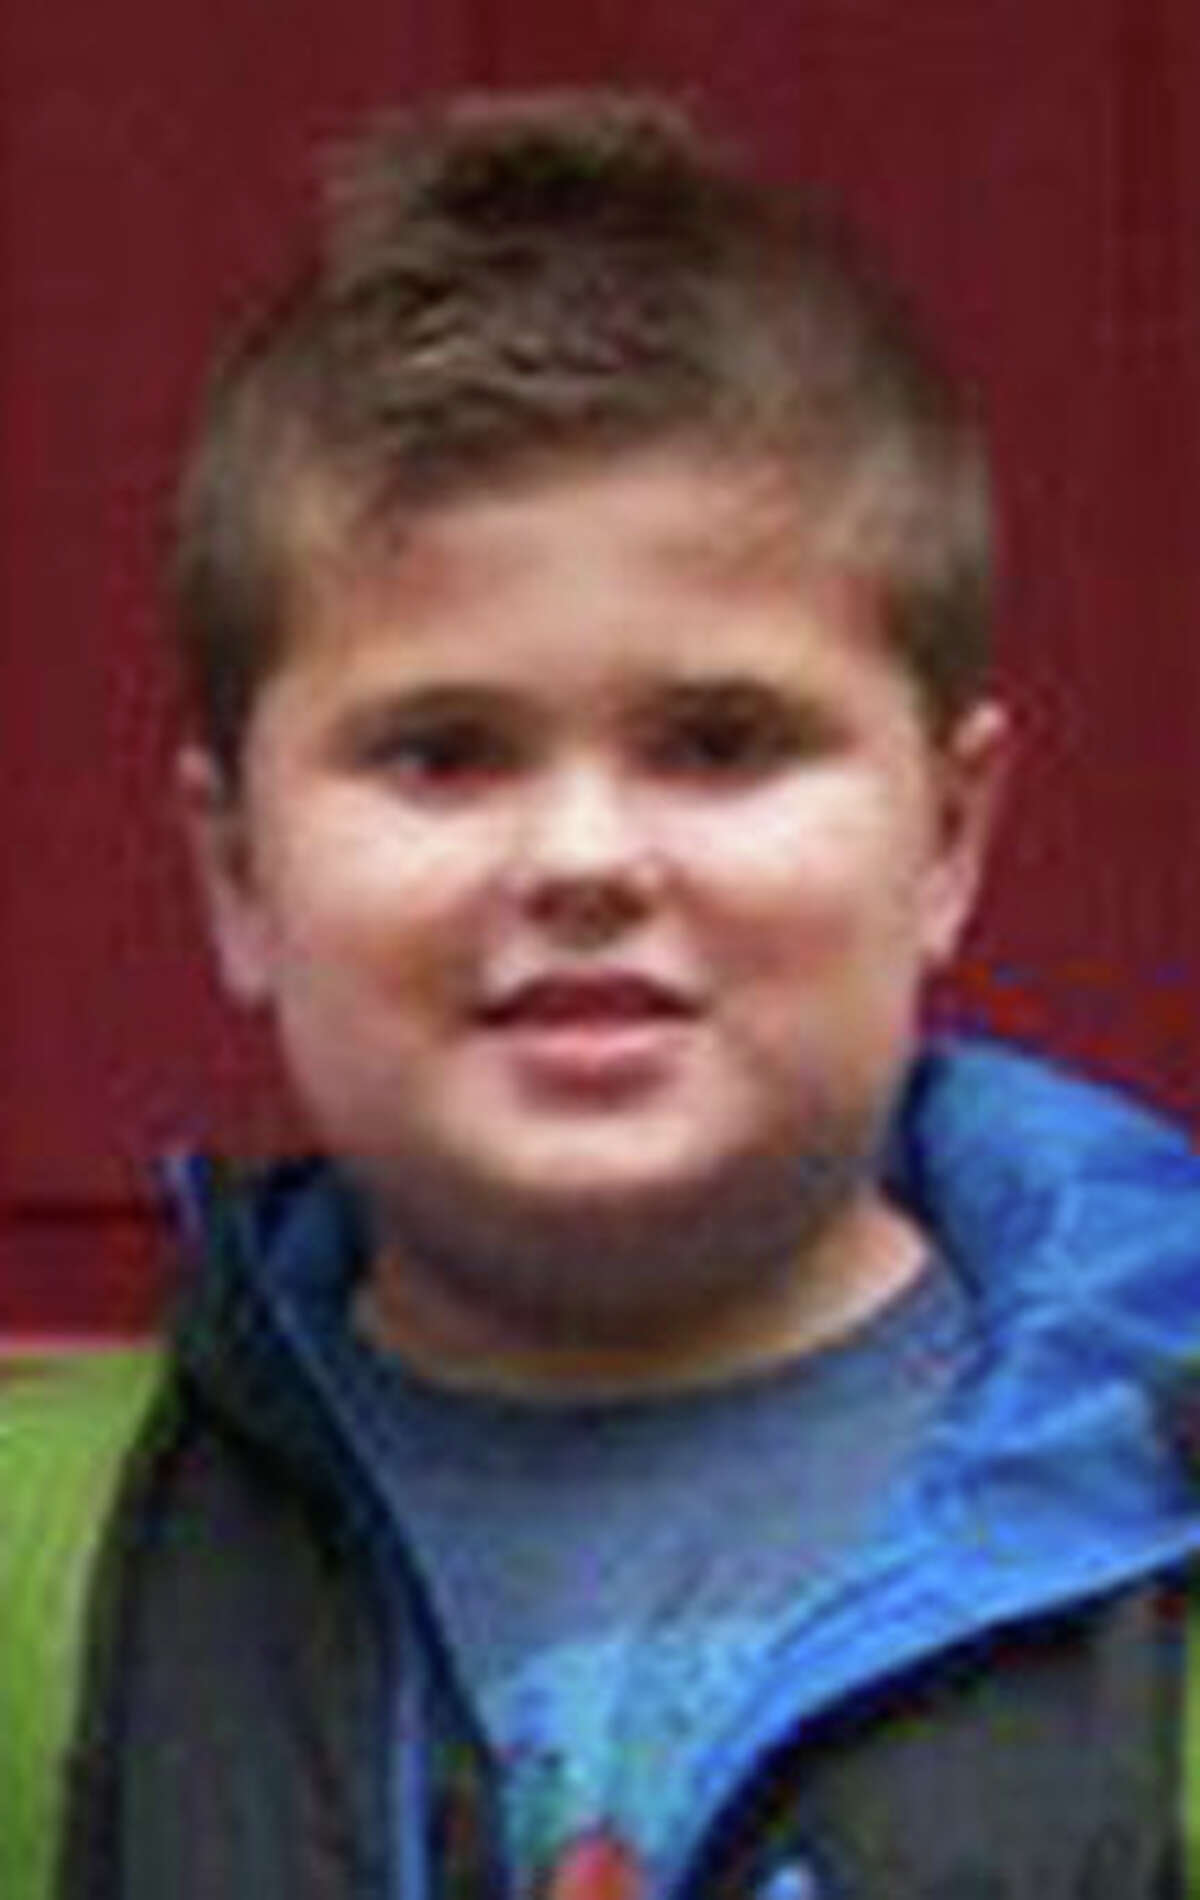 James Mattioli a victim in the Sandy Hook Elementary School shooting in Newtown, Conn. on Friday, Dec 14, 2012.